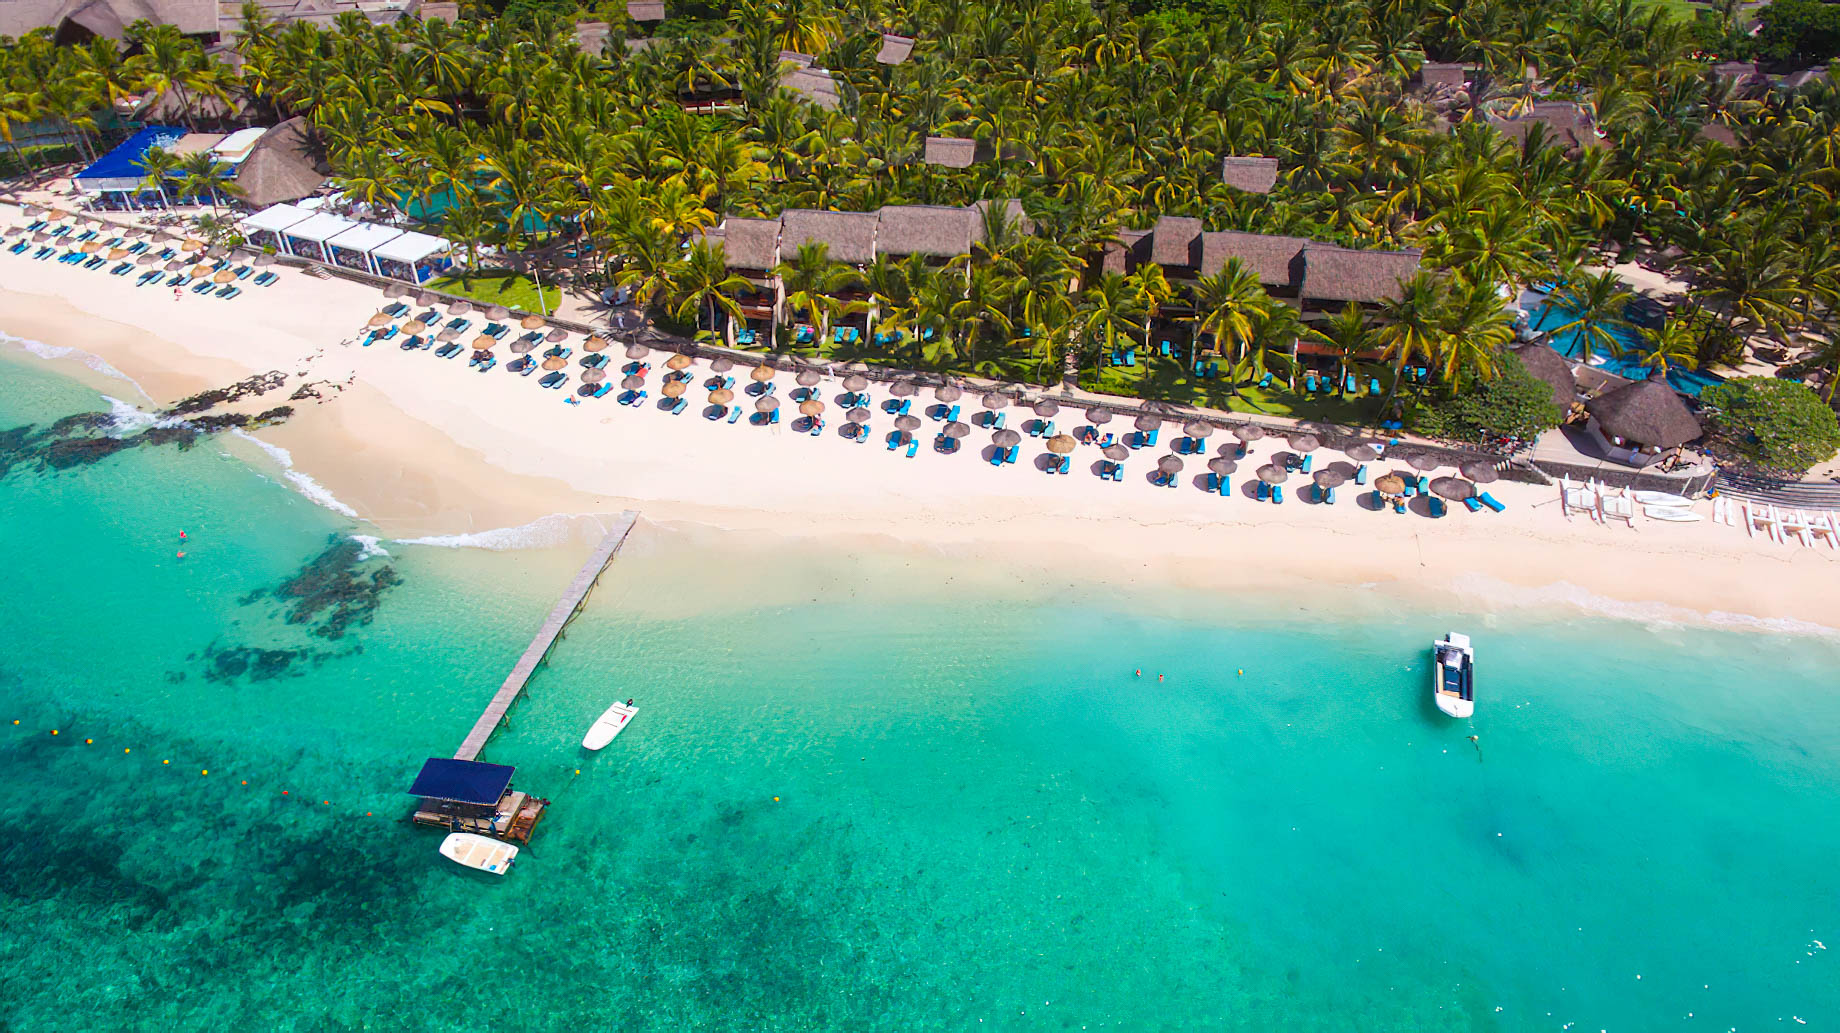 Constance Belle Mare Plage Resort – Mauritius – Beach View Aerial